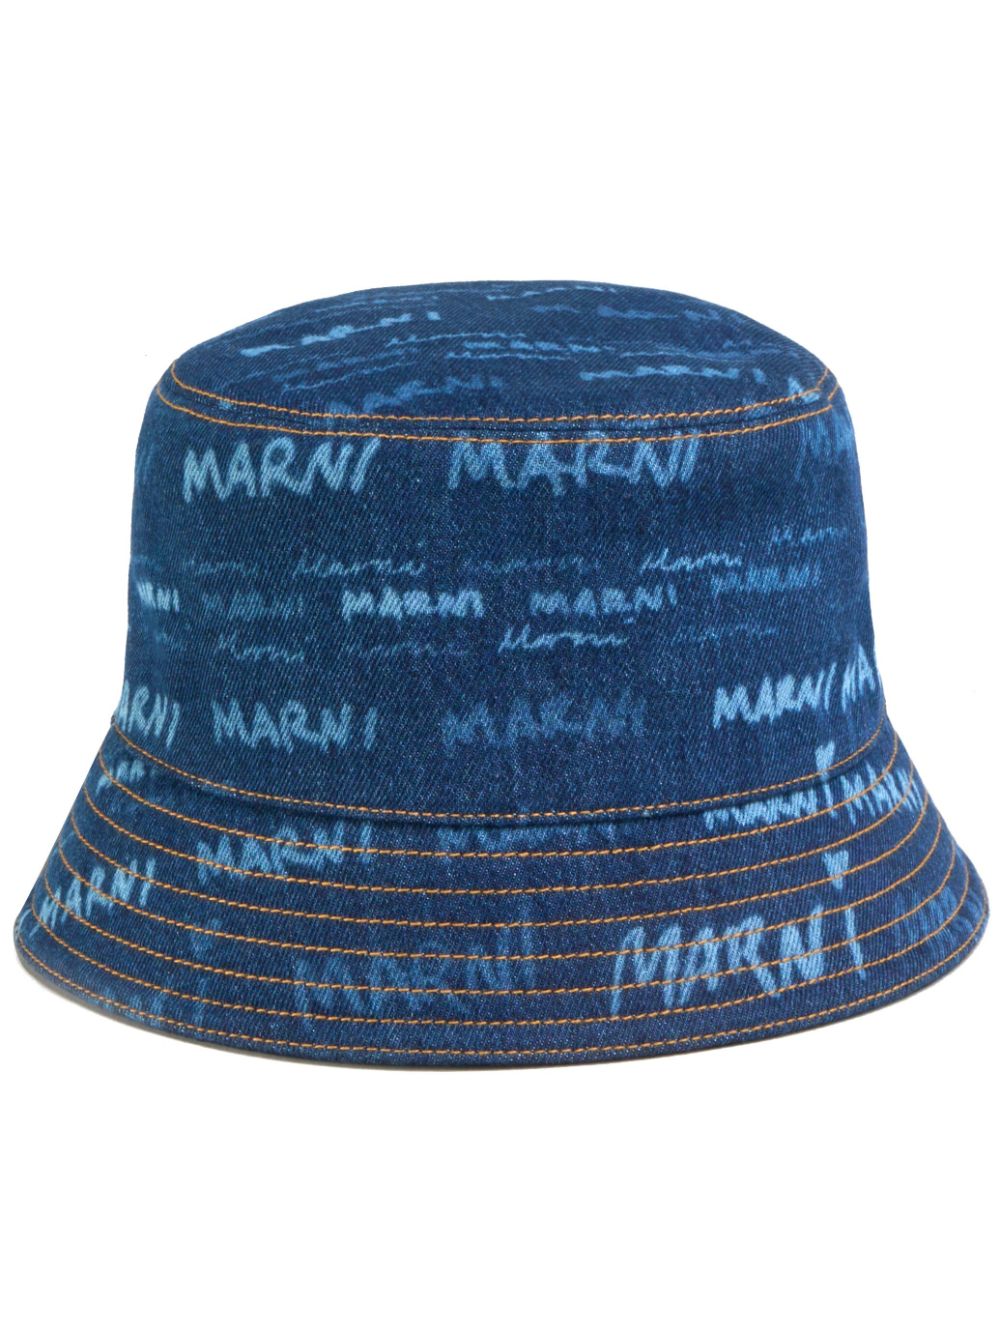 Marine Serre Blue Monogram Denim Bucket Hat - Realry: A global